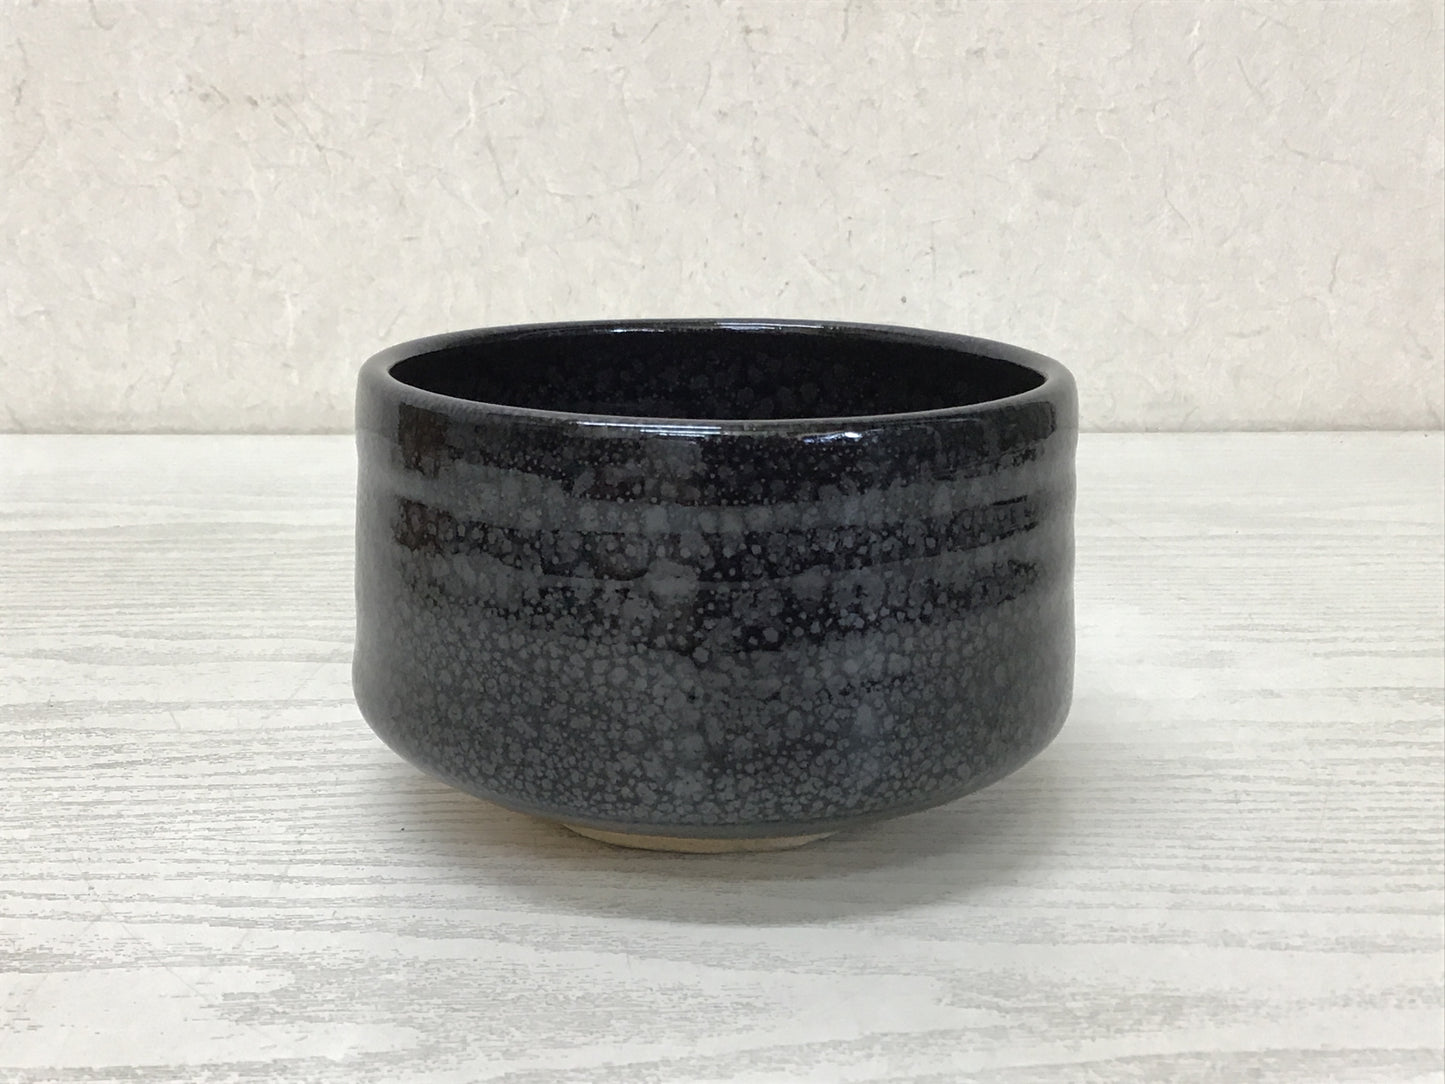 Y1826 CHAWAN Seto-ware signed box Japanese bowl pottery Japan tea ceremony